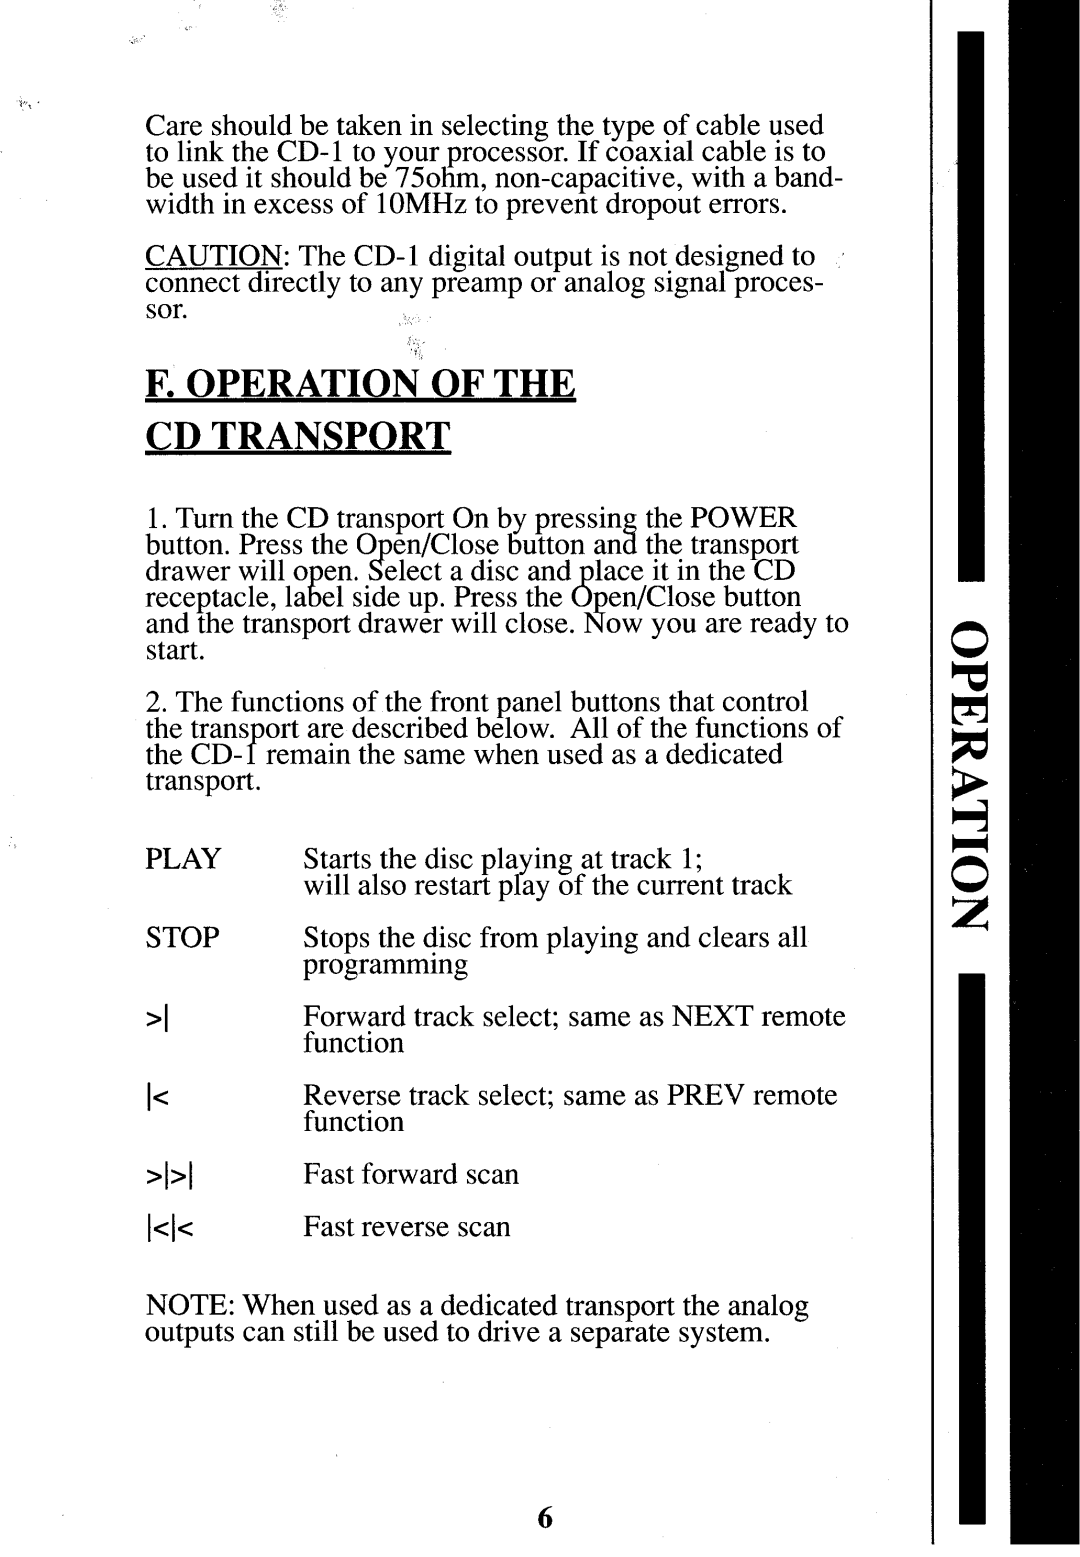 Krell Industries CD-1 manual F.Operationof The Cd Transport 